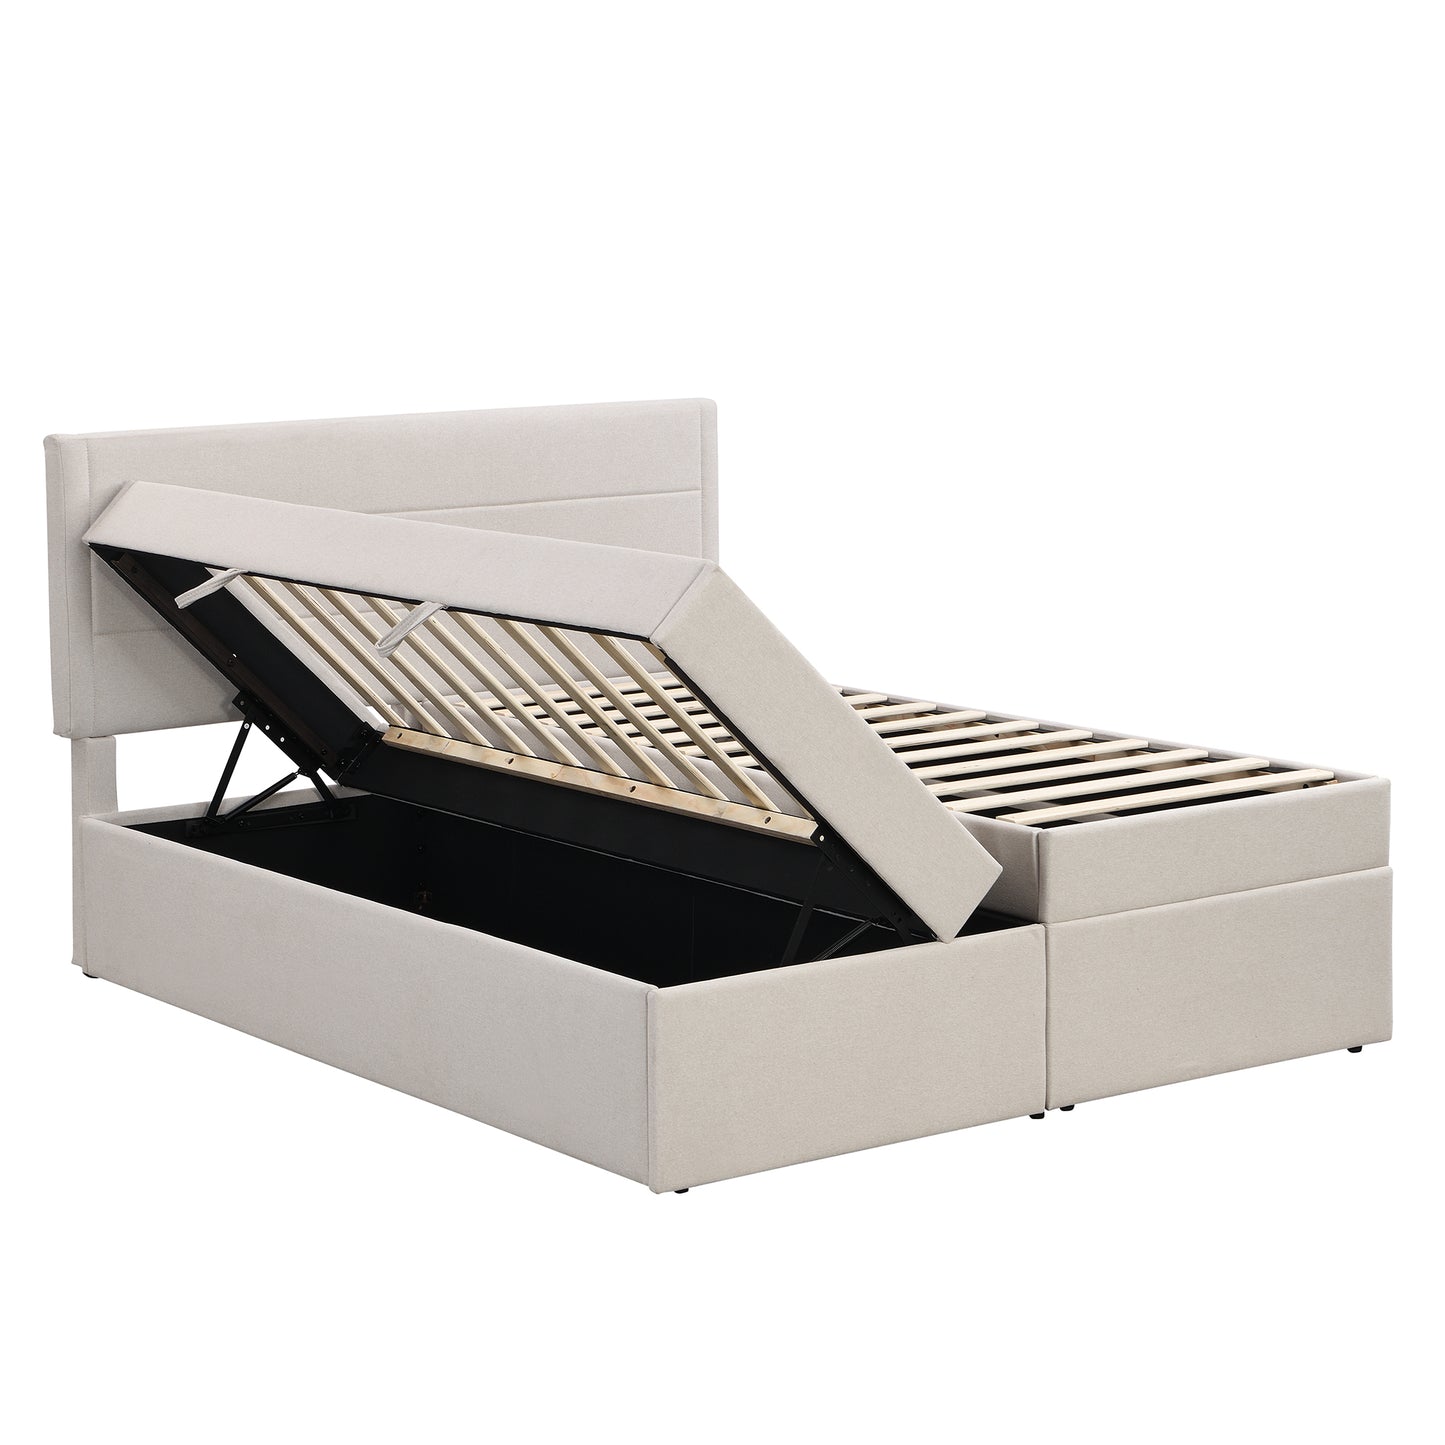 Queen Size Upholstered Platform Bed with Storage Underneath, Beige